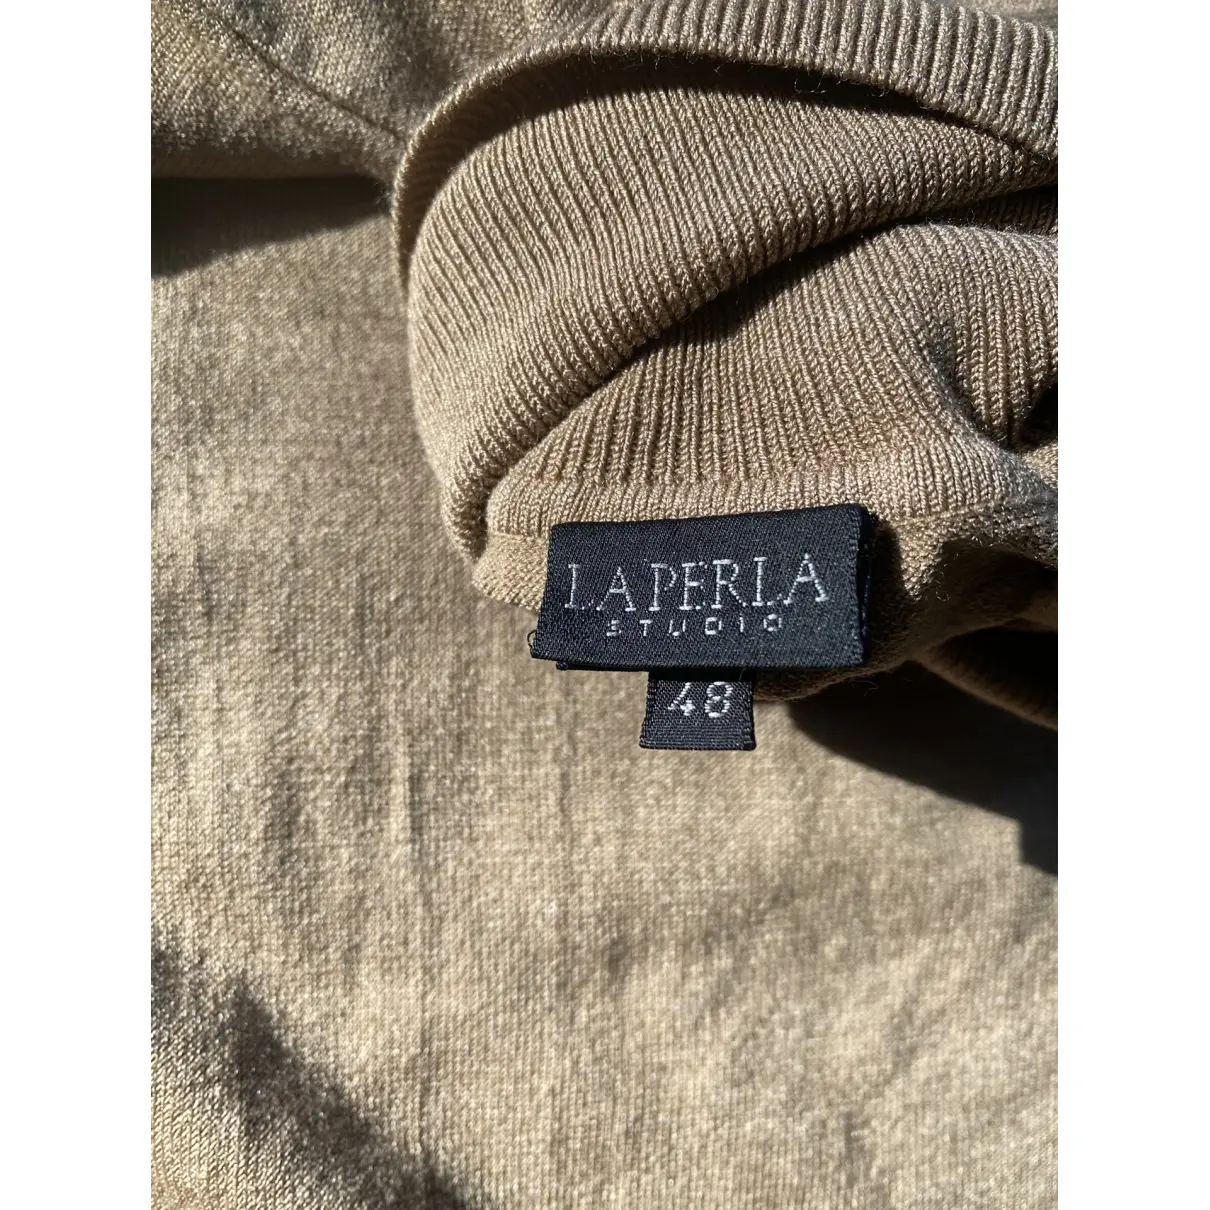 Buy La Perla Silk jumper online